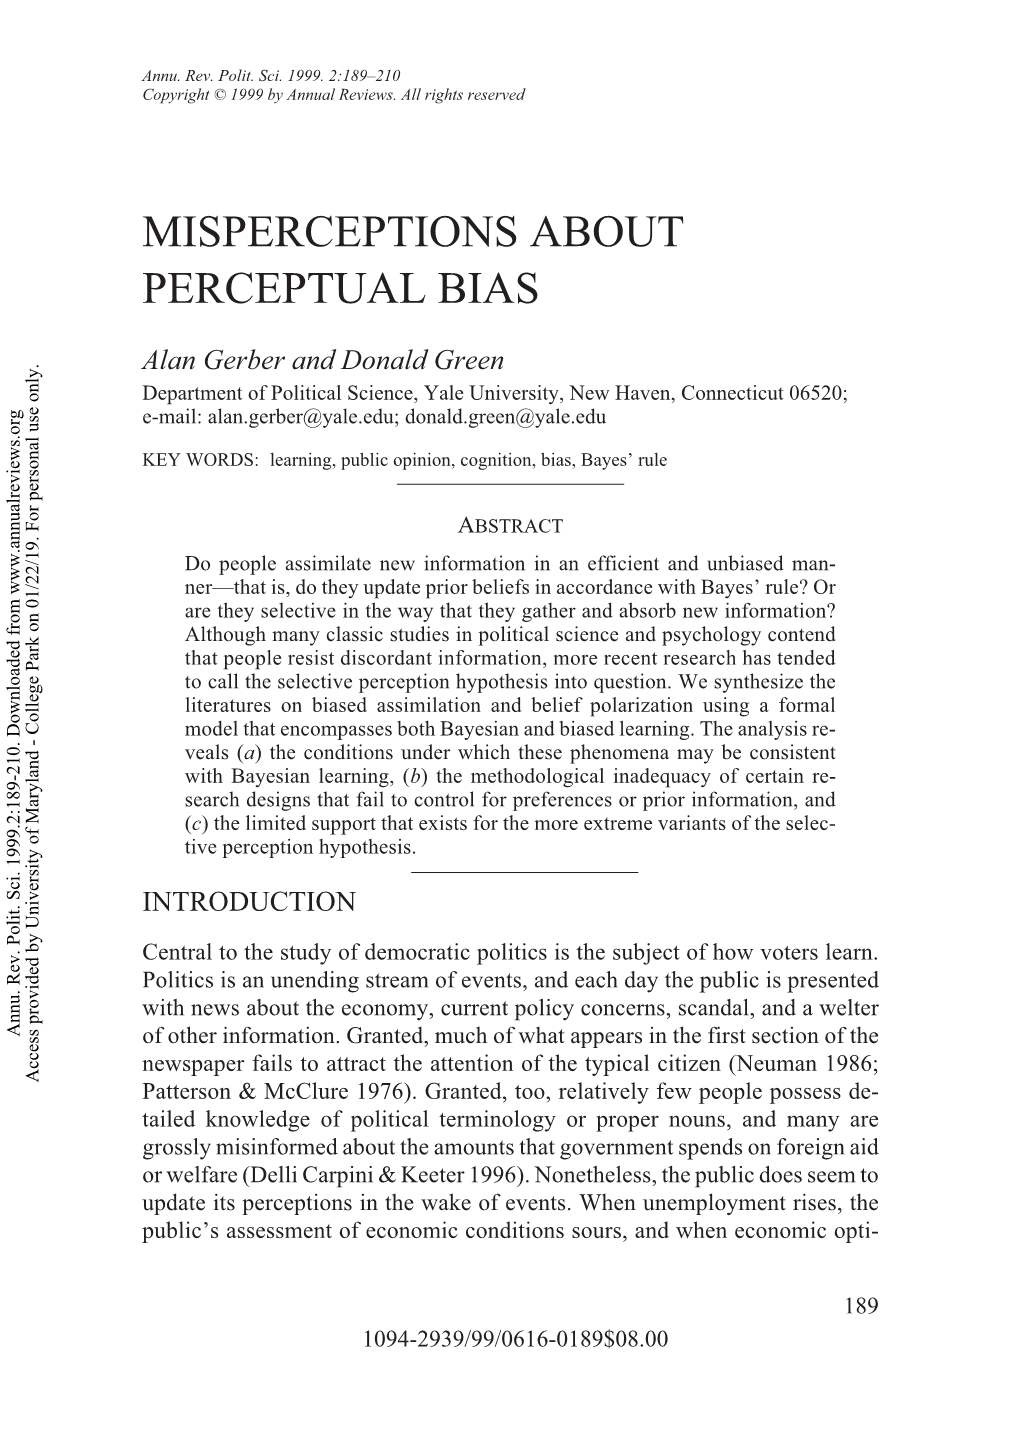 Gerber, A. and D. Green (1999), Misperceptions About Perceptual Bias